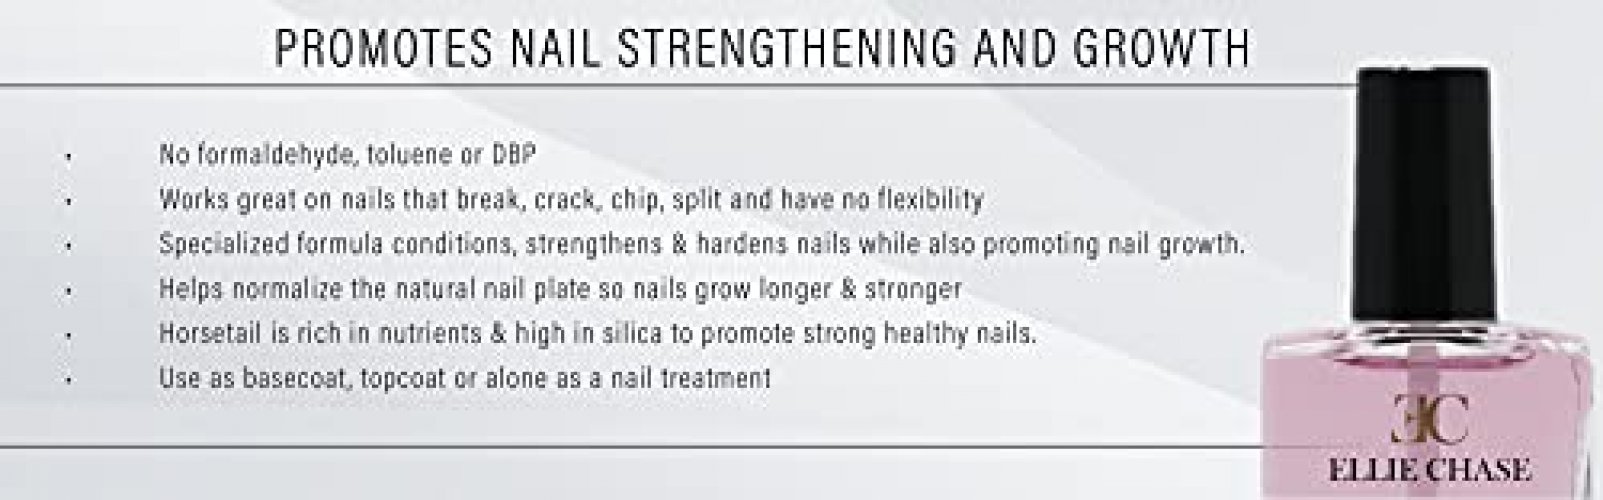 Buy Ruby Kisses Nail Treatment, Garlic Nail Strengthener, Nail Growth &  Repair, Strengthening Polish for Thin Damaged Nail, Stops Splits, Chips and  Cracks, Infused with Garlic & Vitamin E (1 PACK) Online